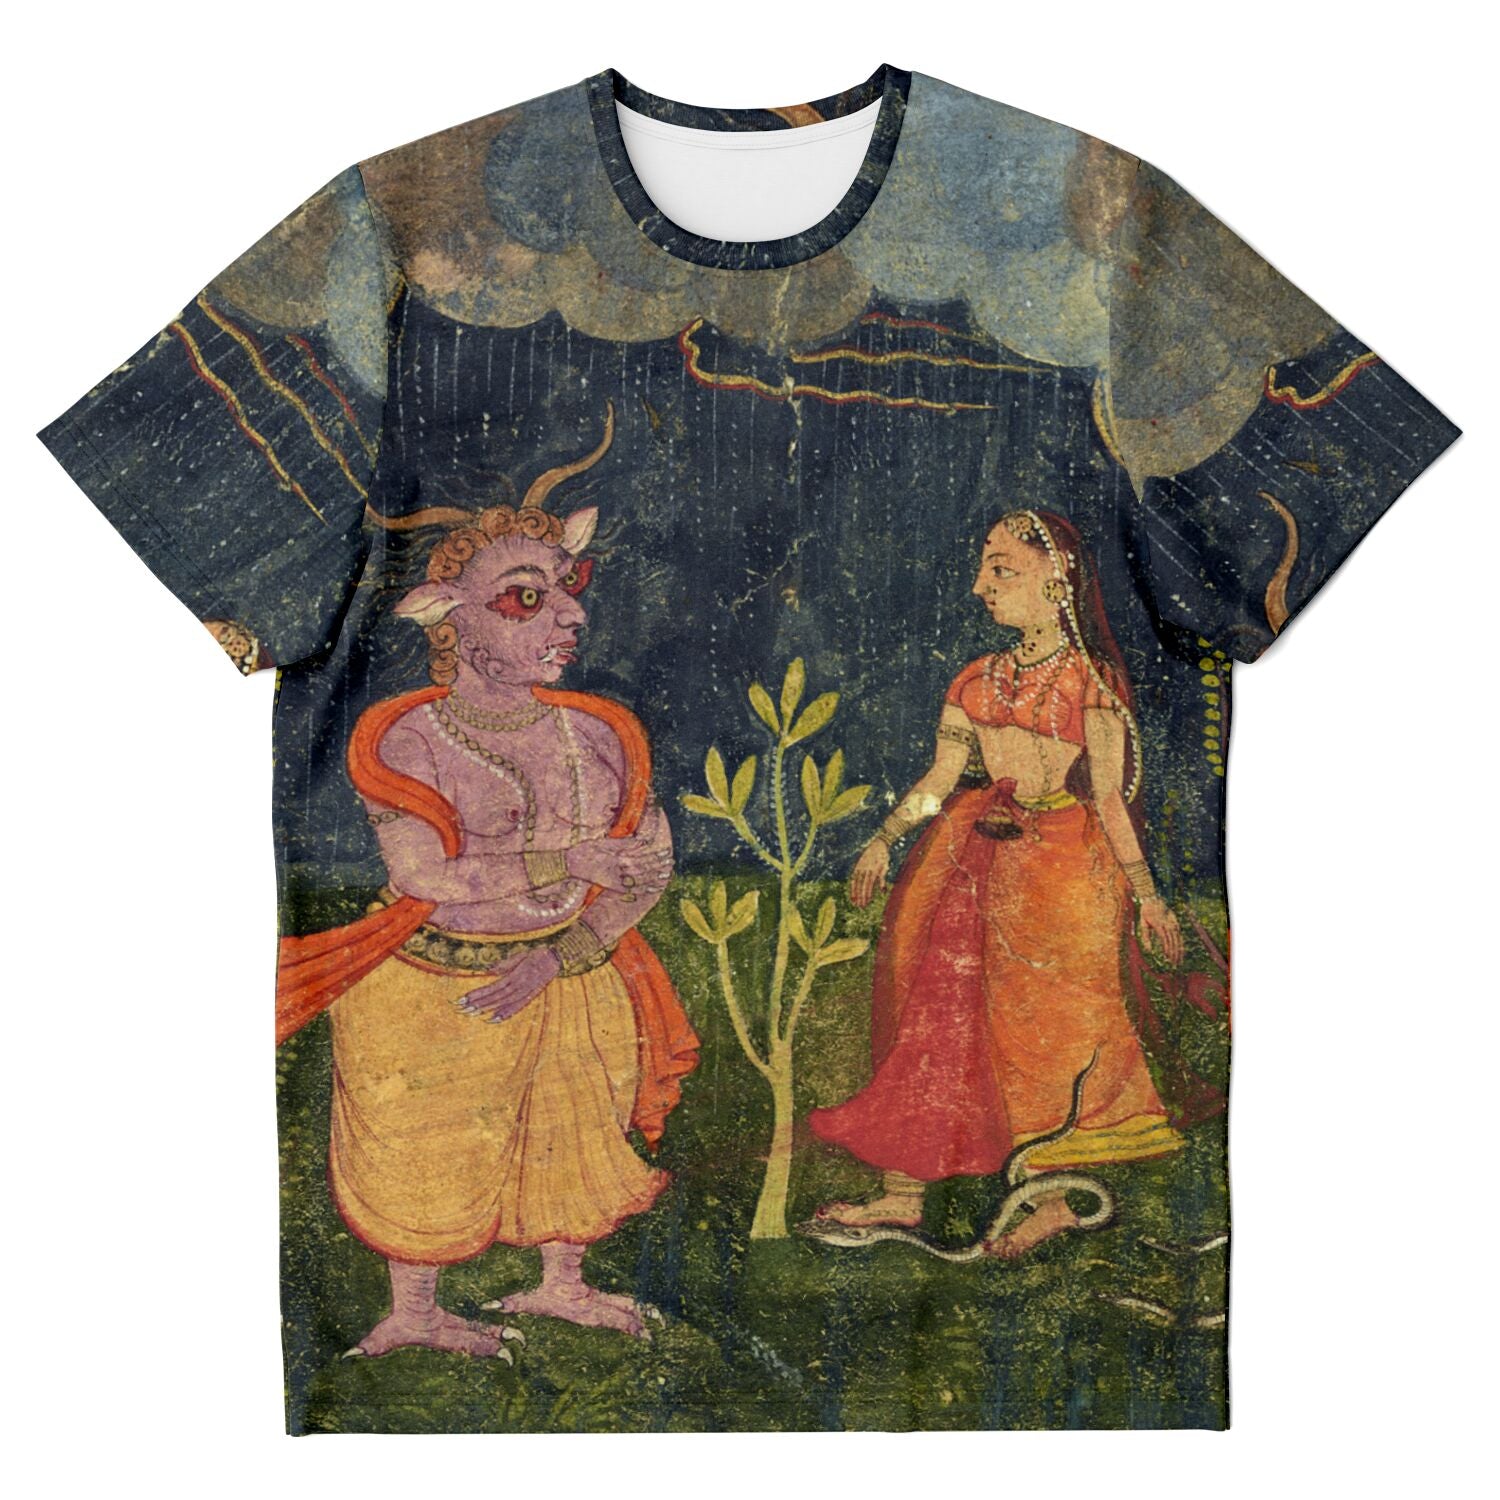 T-shirt XS Rakshasas: Shape-Shifting Demons, Supernatural Deities of Indian Mythology | Vintage Hindu Folklore Graphic Art T-Shirt